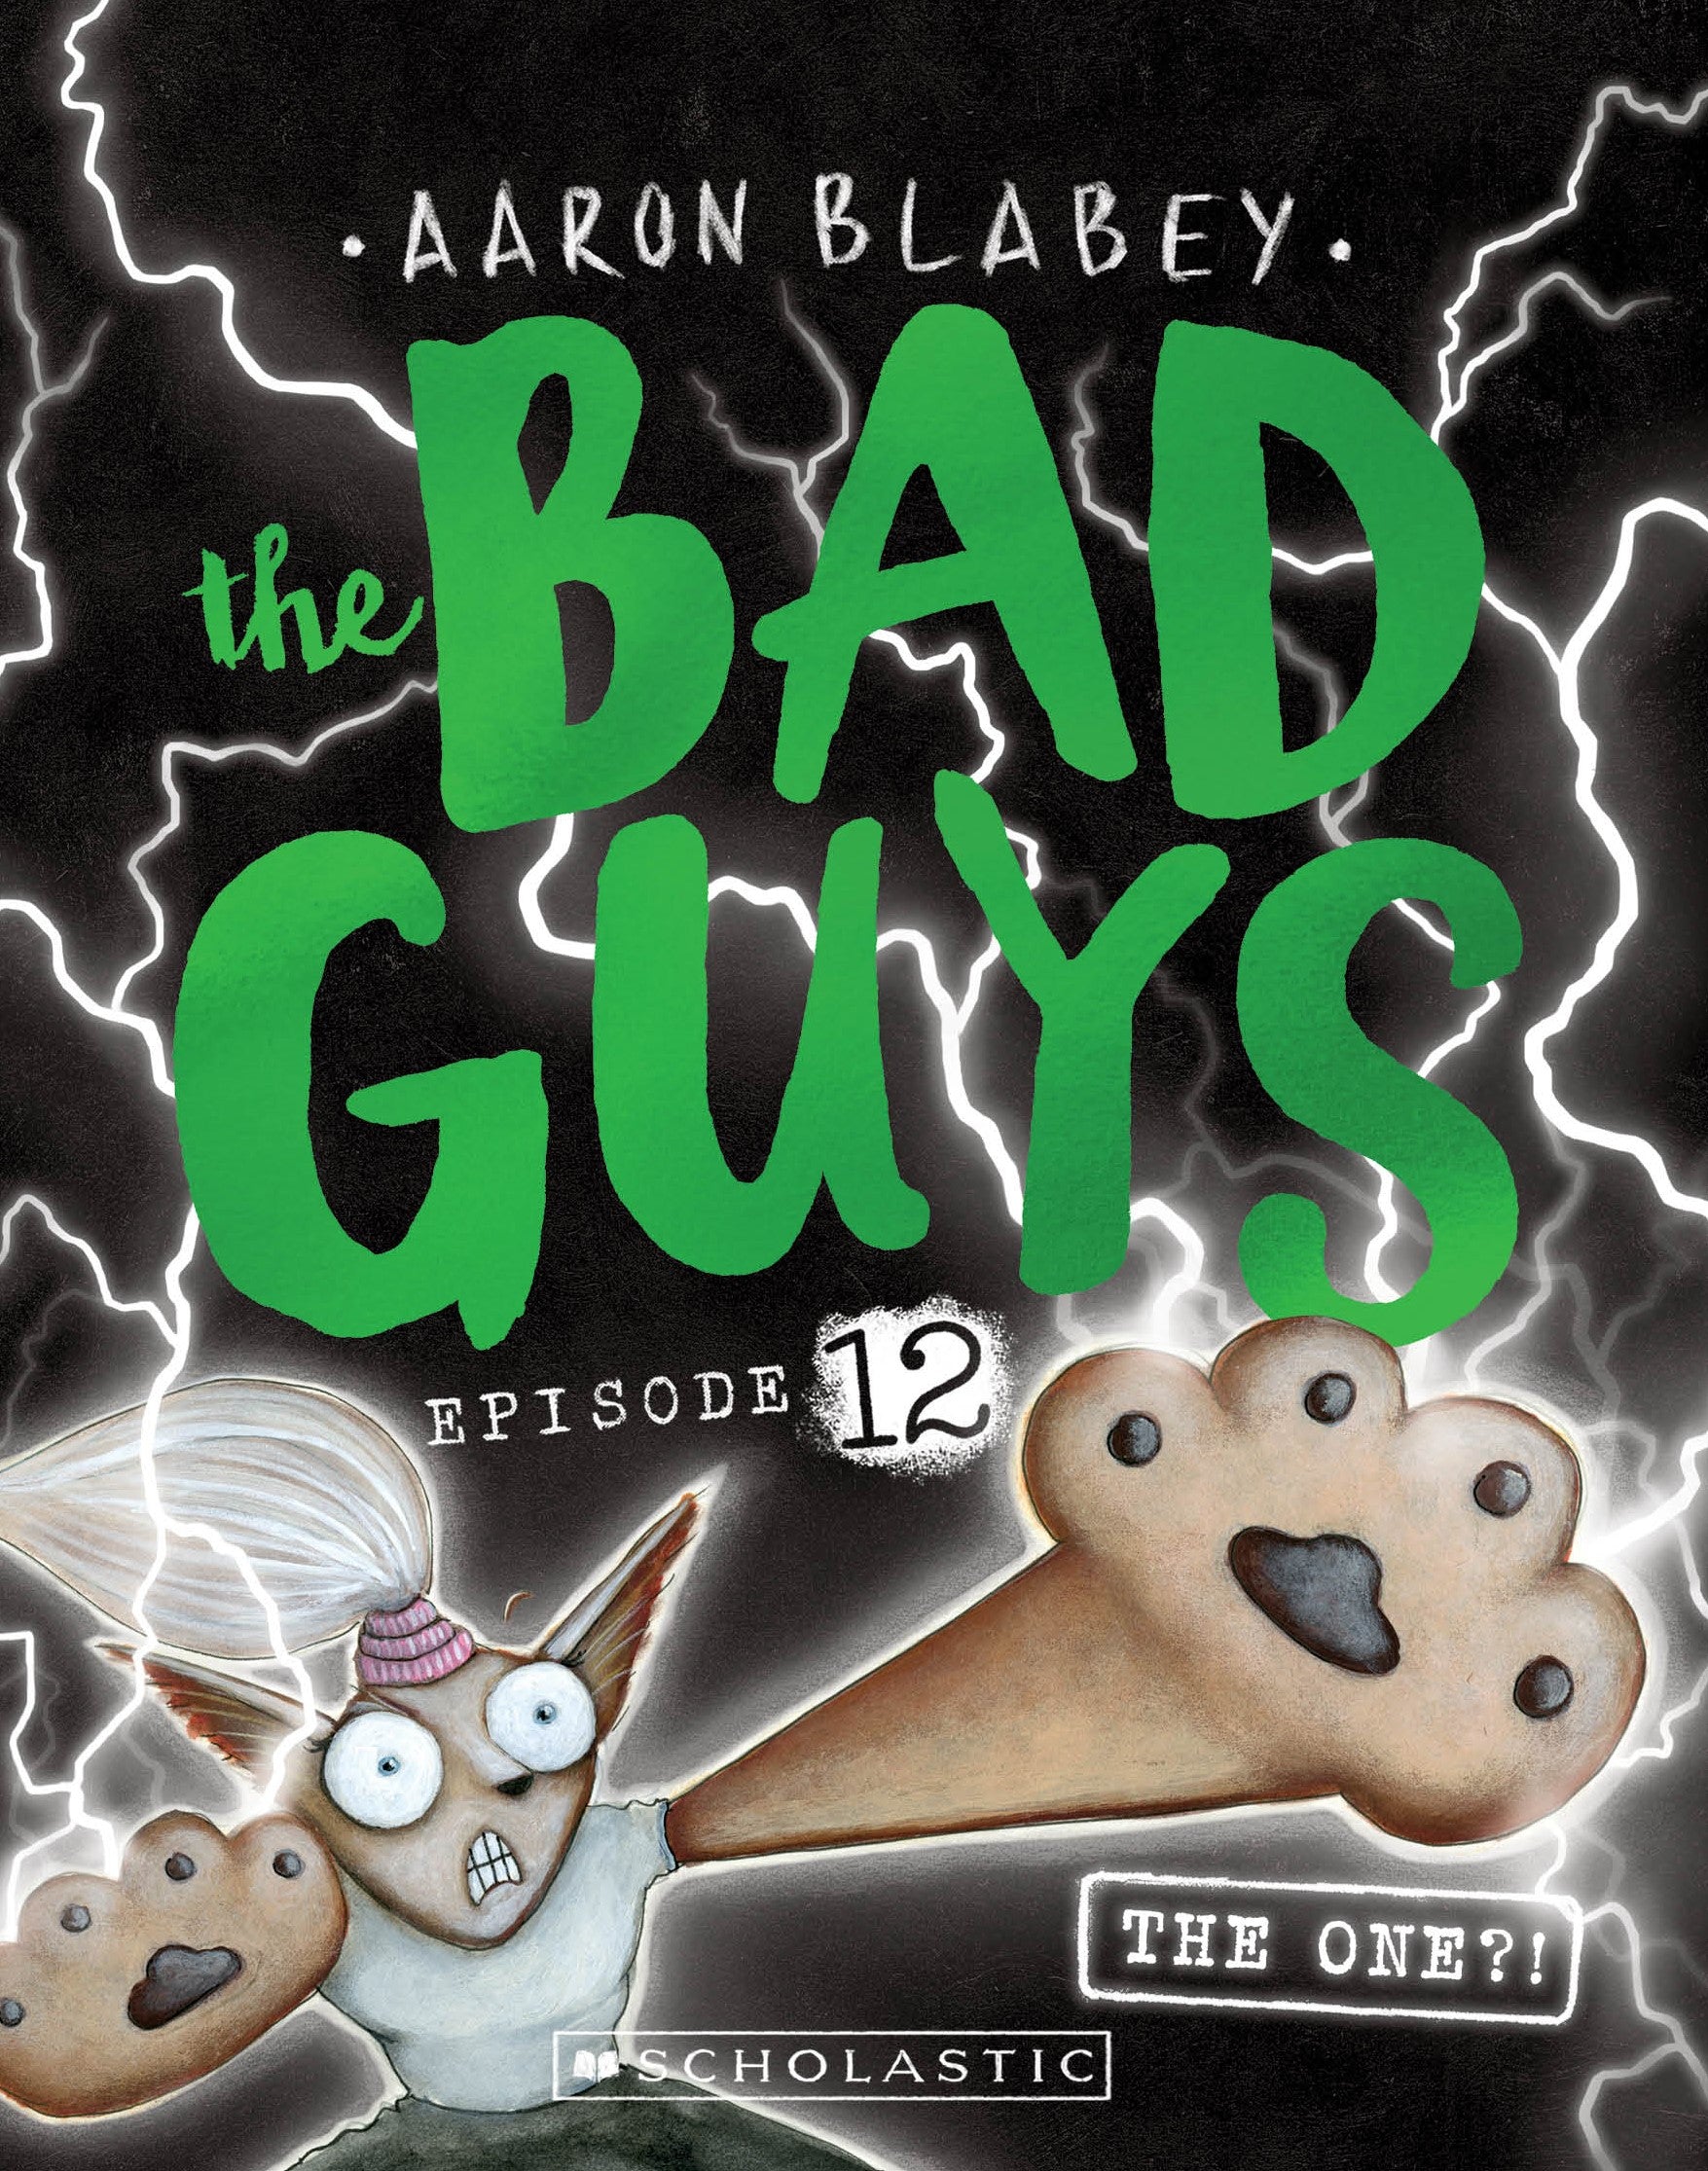 The Bad Guys 